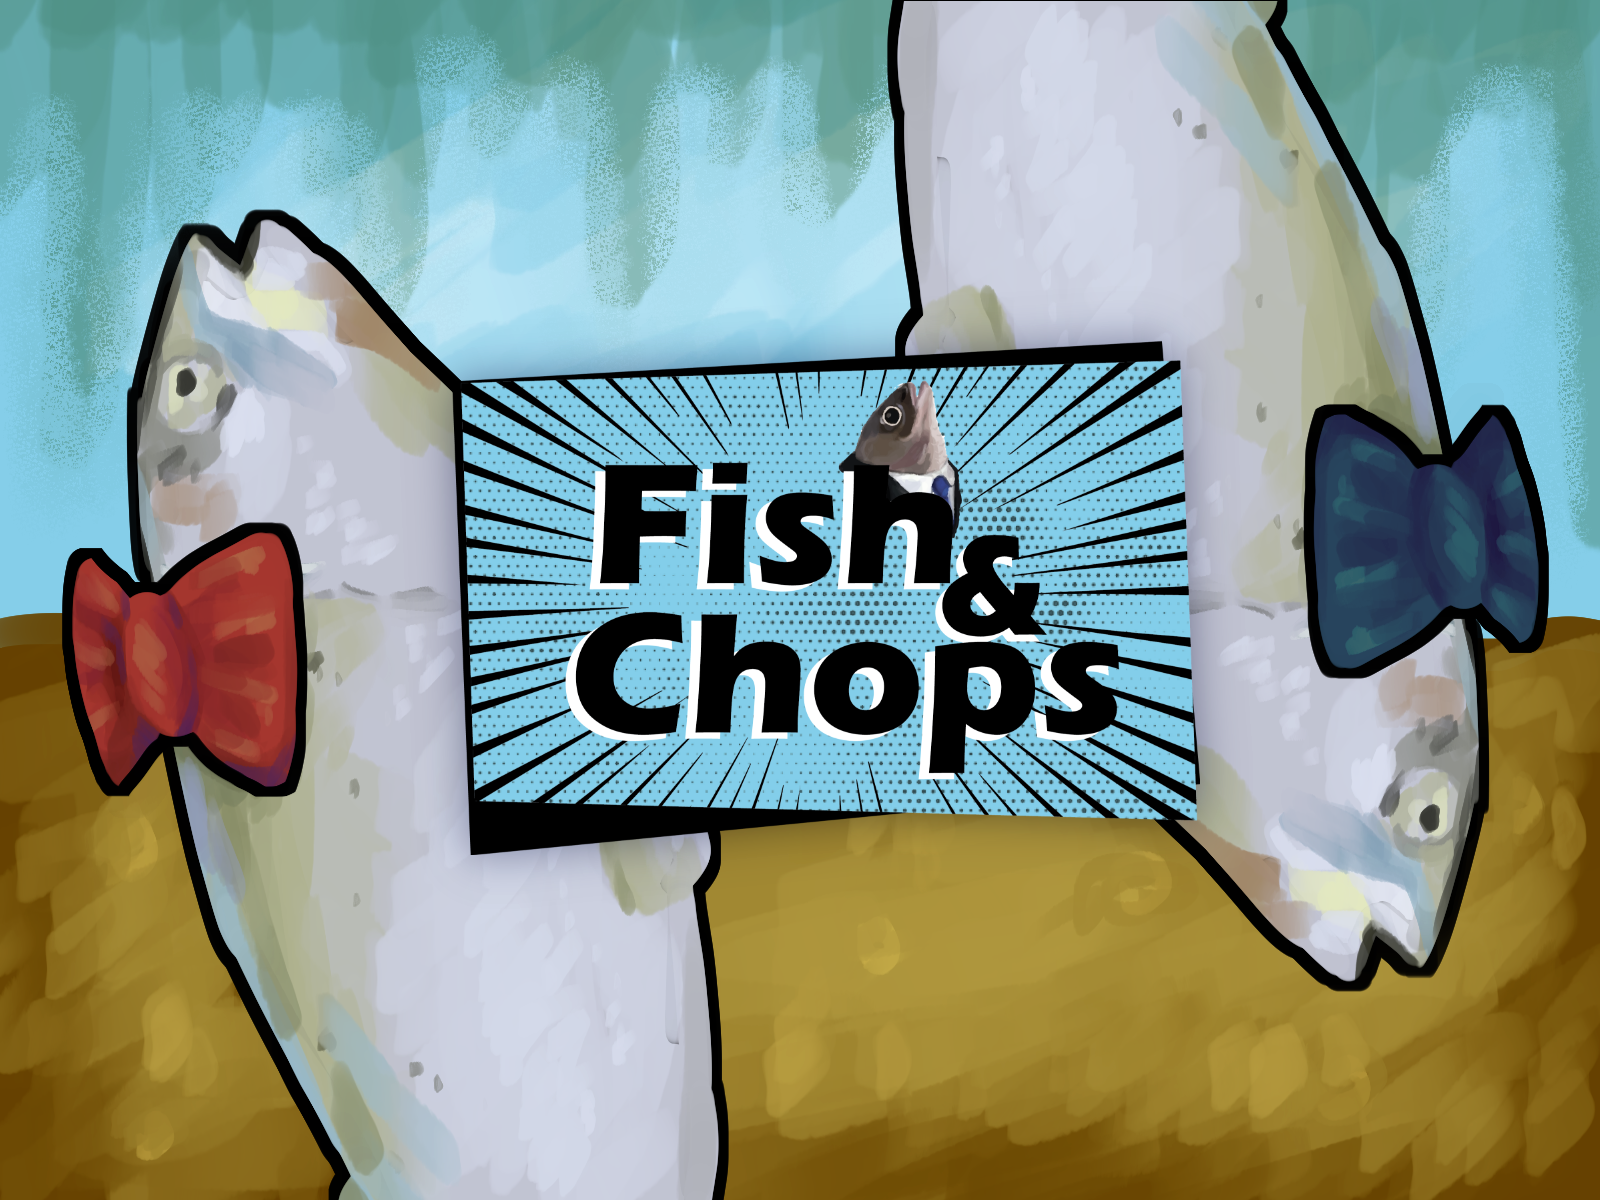 Fish & Chops